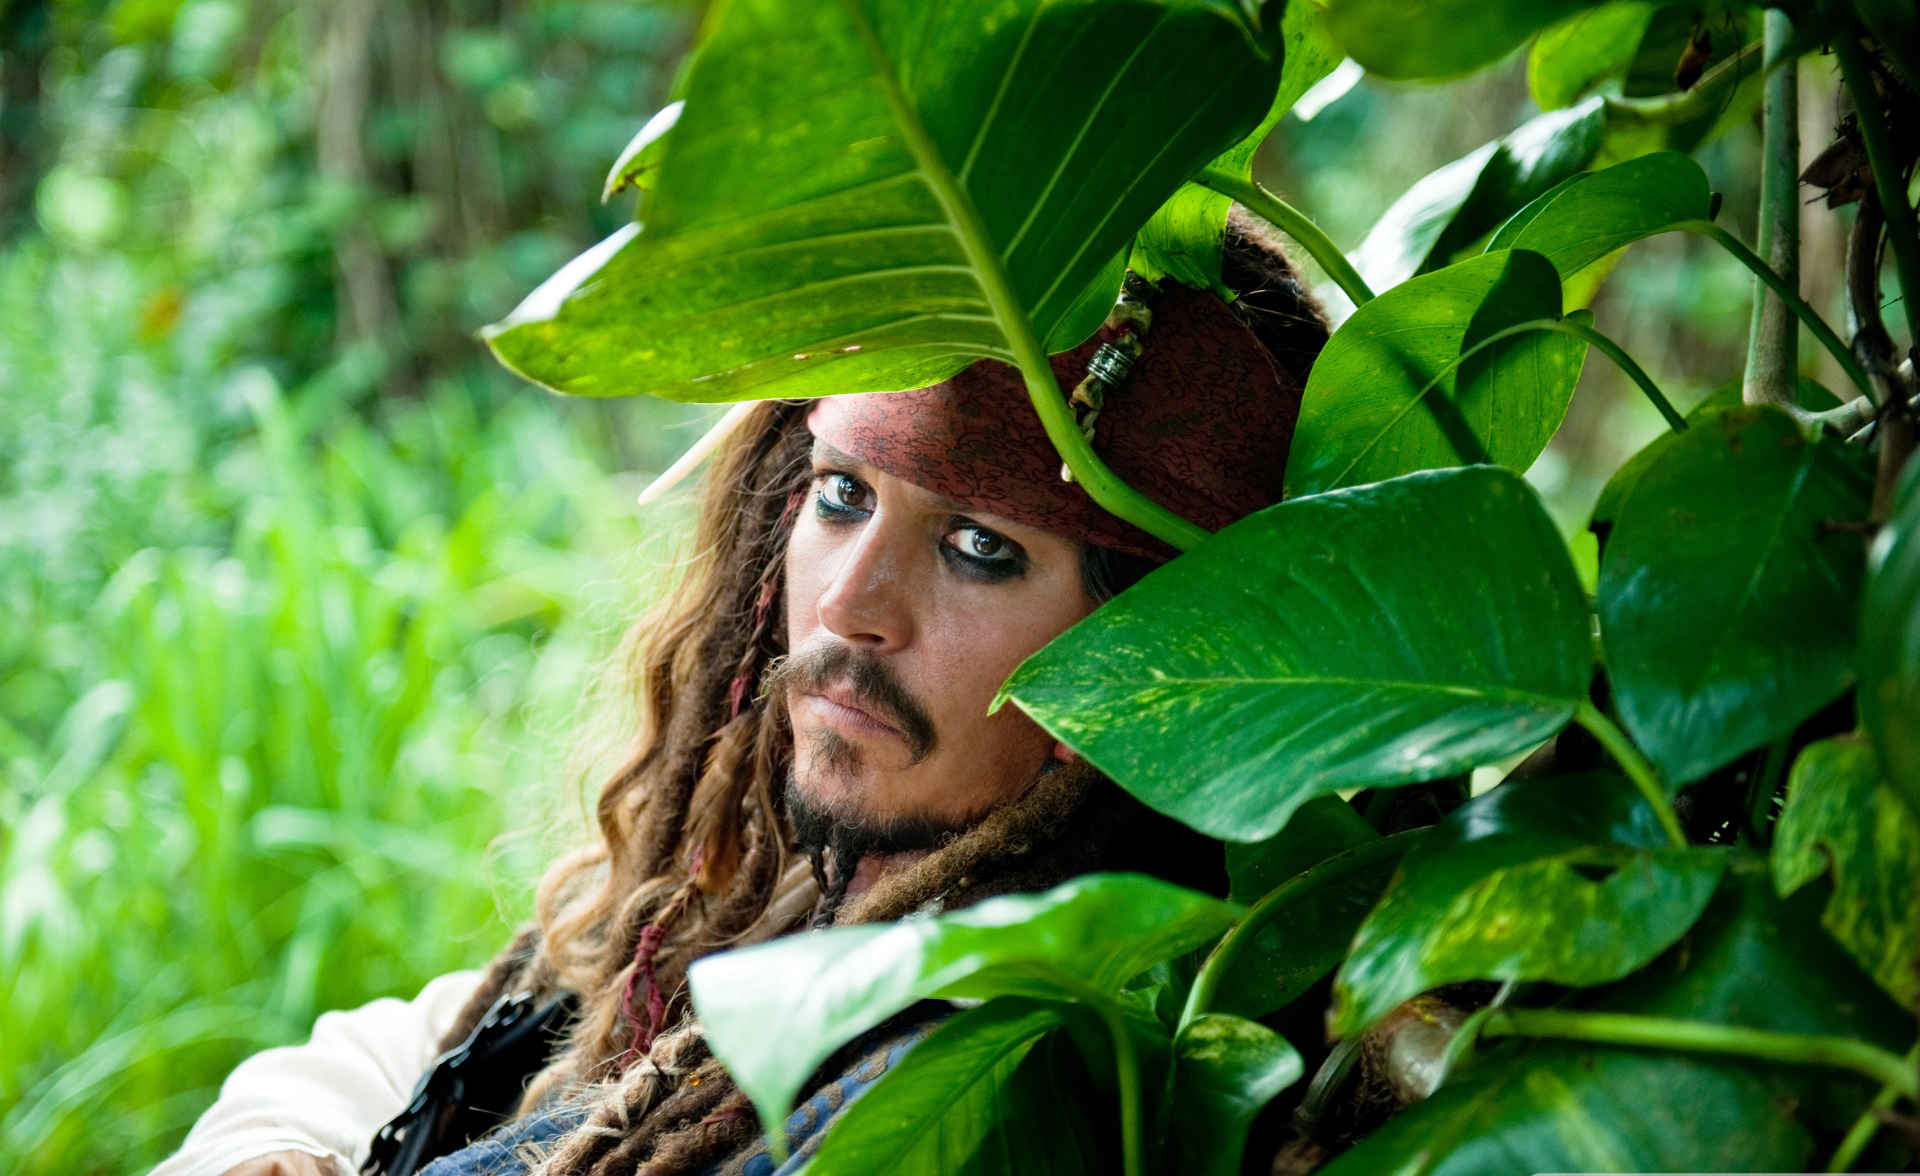 5001x1000 Resolution Johnny Depp in Pirate Look 5001x1000 Resolution ...